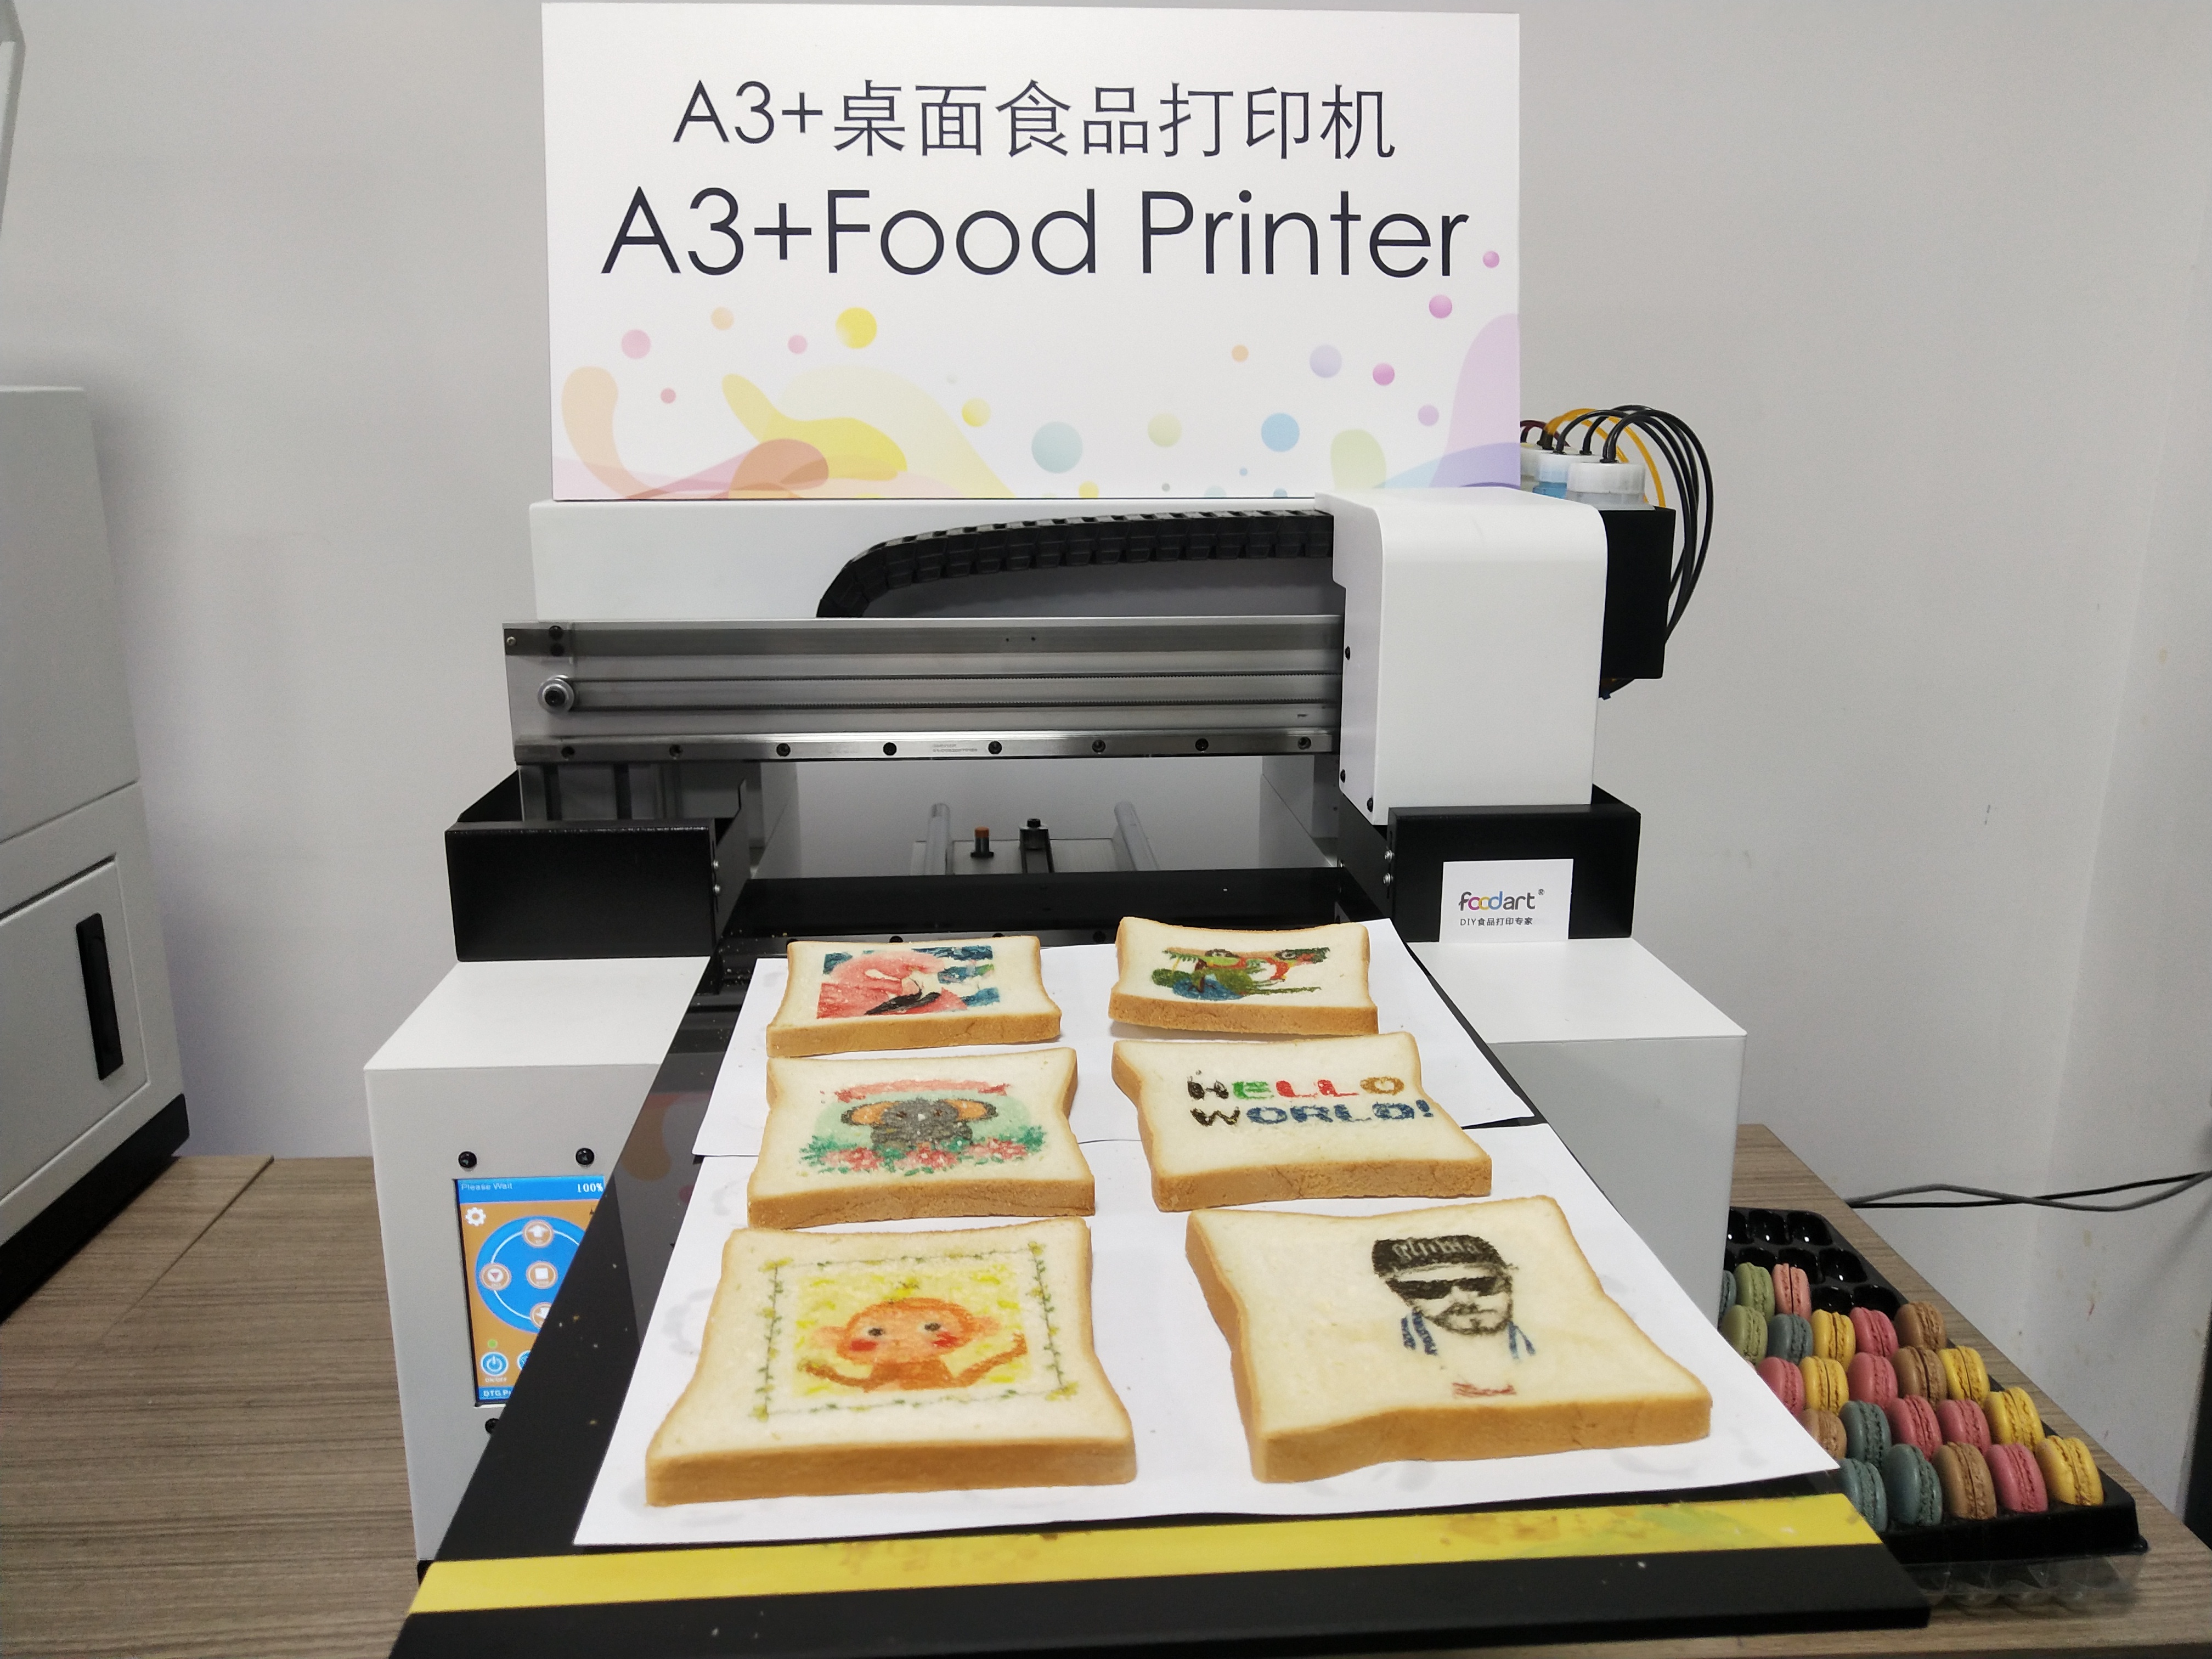 A3+ Flatbed Food Printer